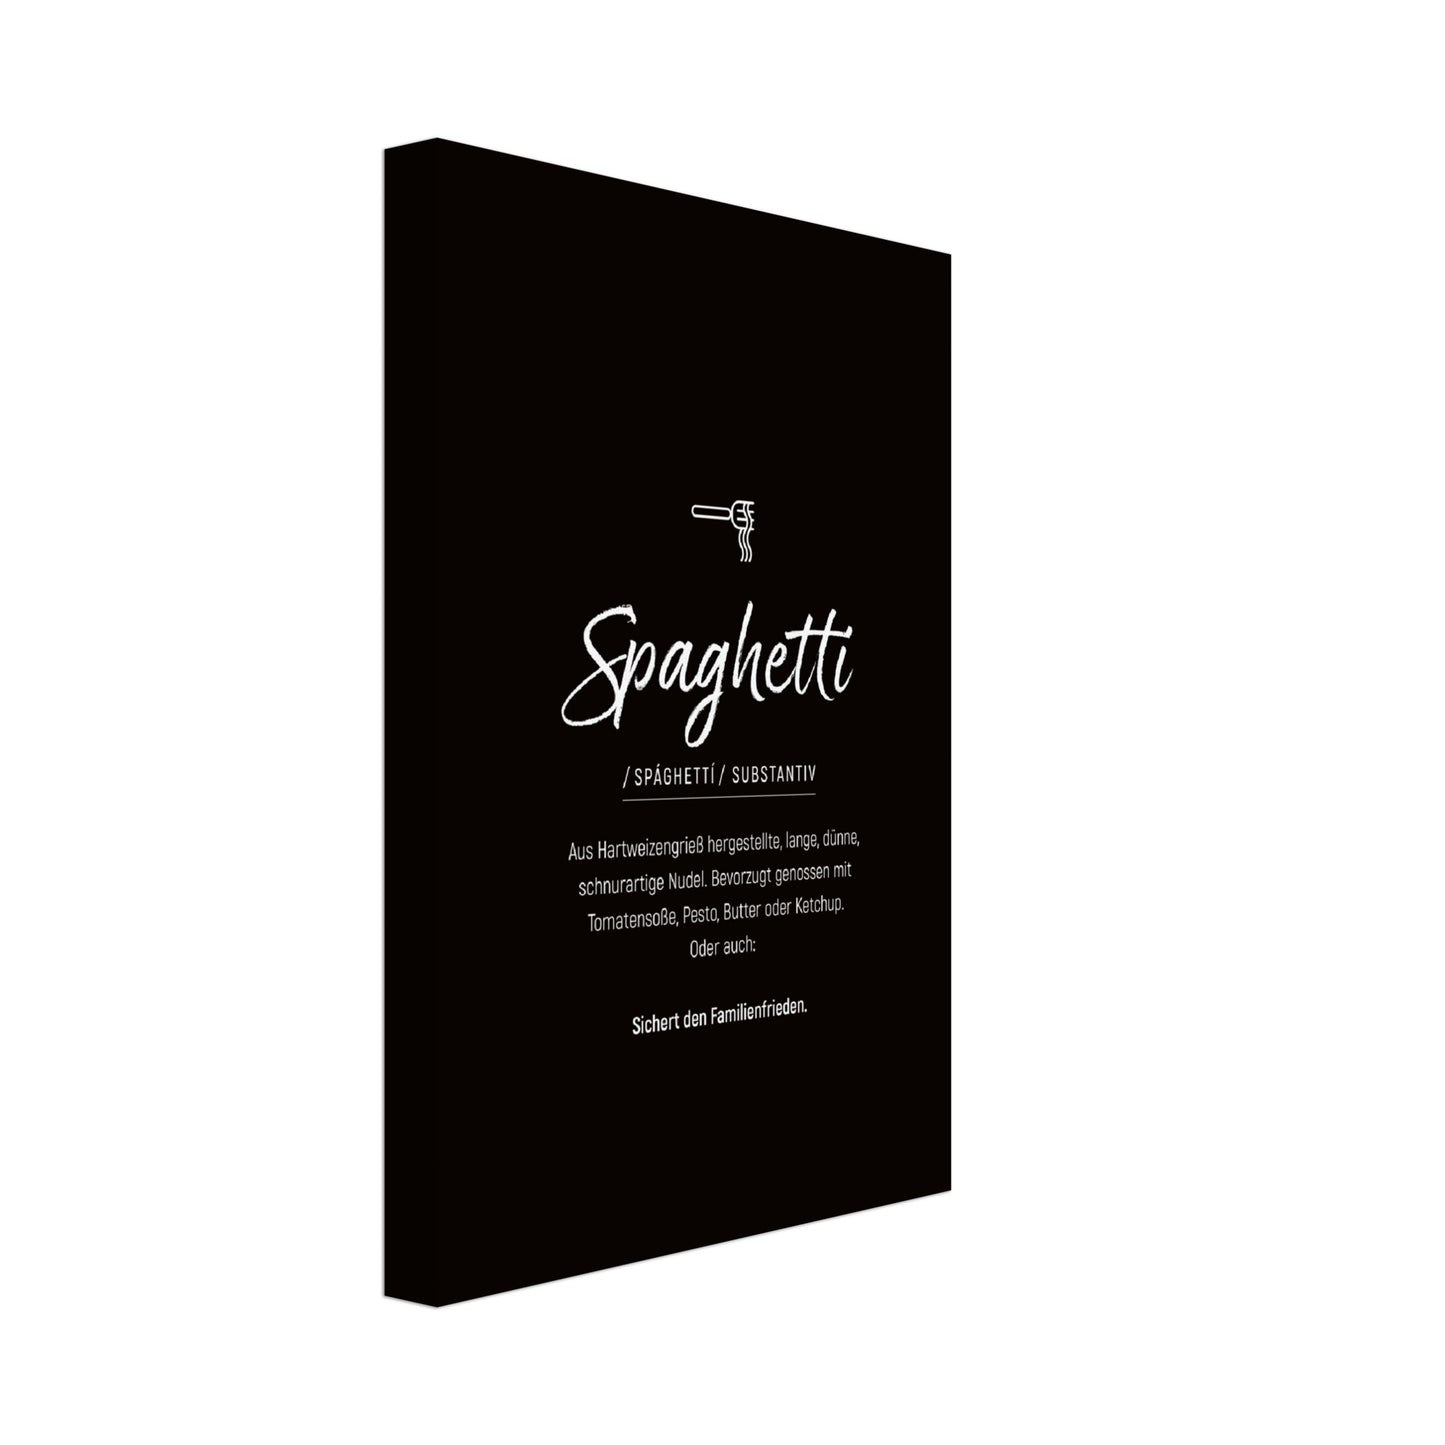 Spaghetti - Wortdefinition-Wandbild - Leinwand Schwarzgrau Neutral im Hochformat - Typografie Worte Sprache Leben Alltag